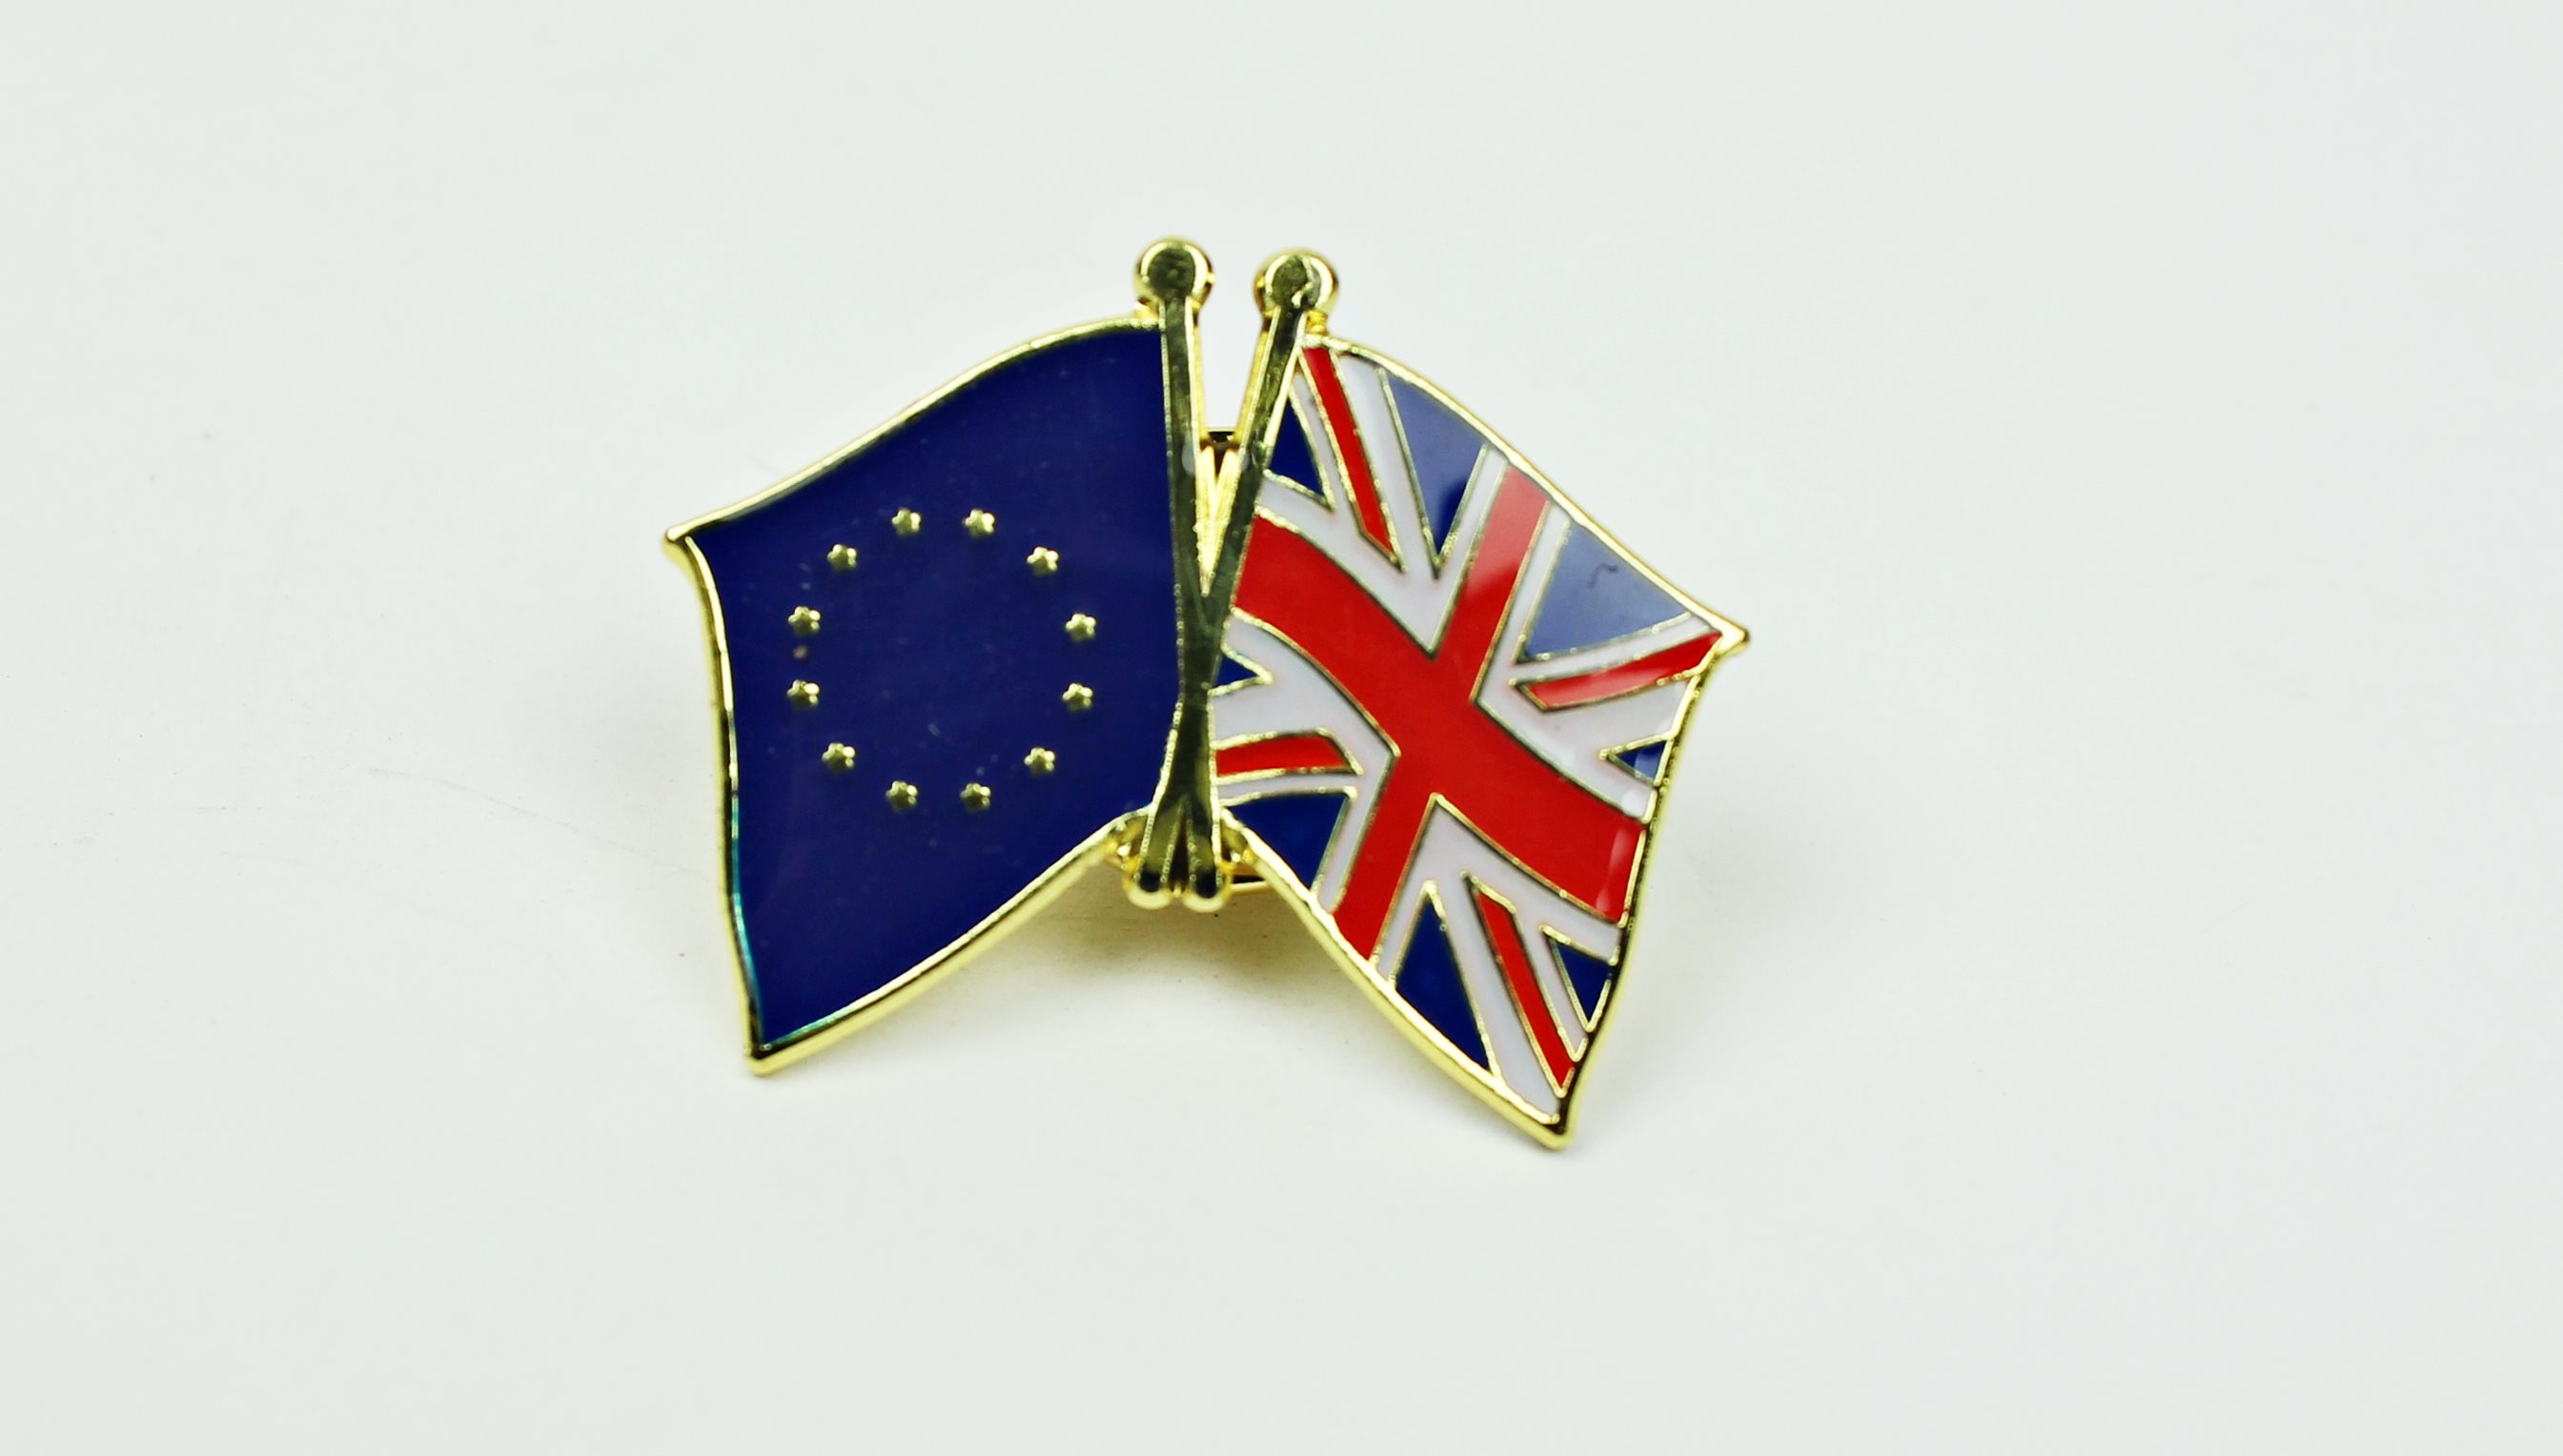 Europa Flaggen Pin EU rund  Anstecker Anstecknadel  Button Badge  NEU